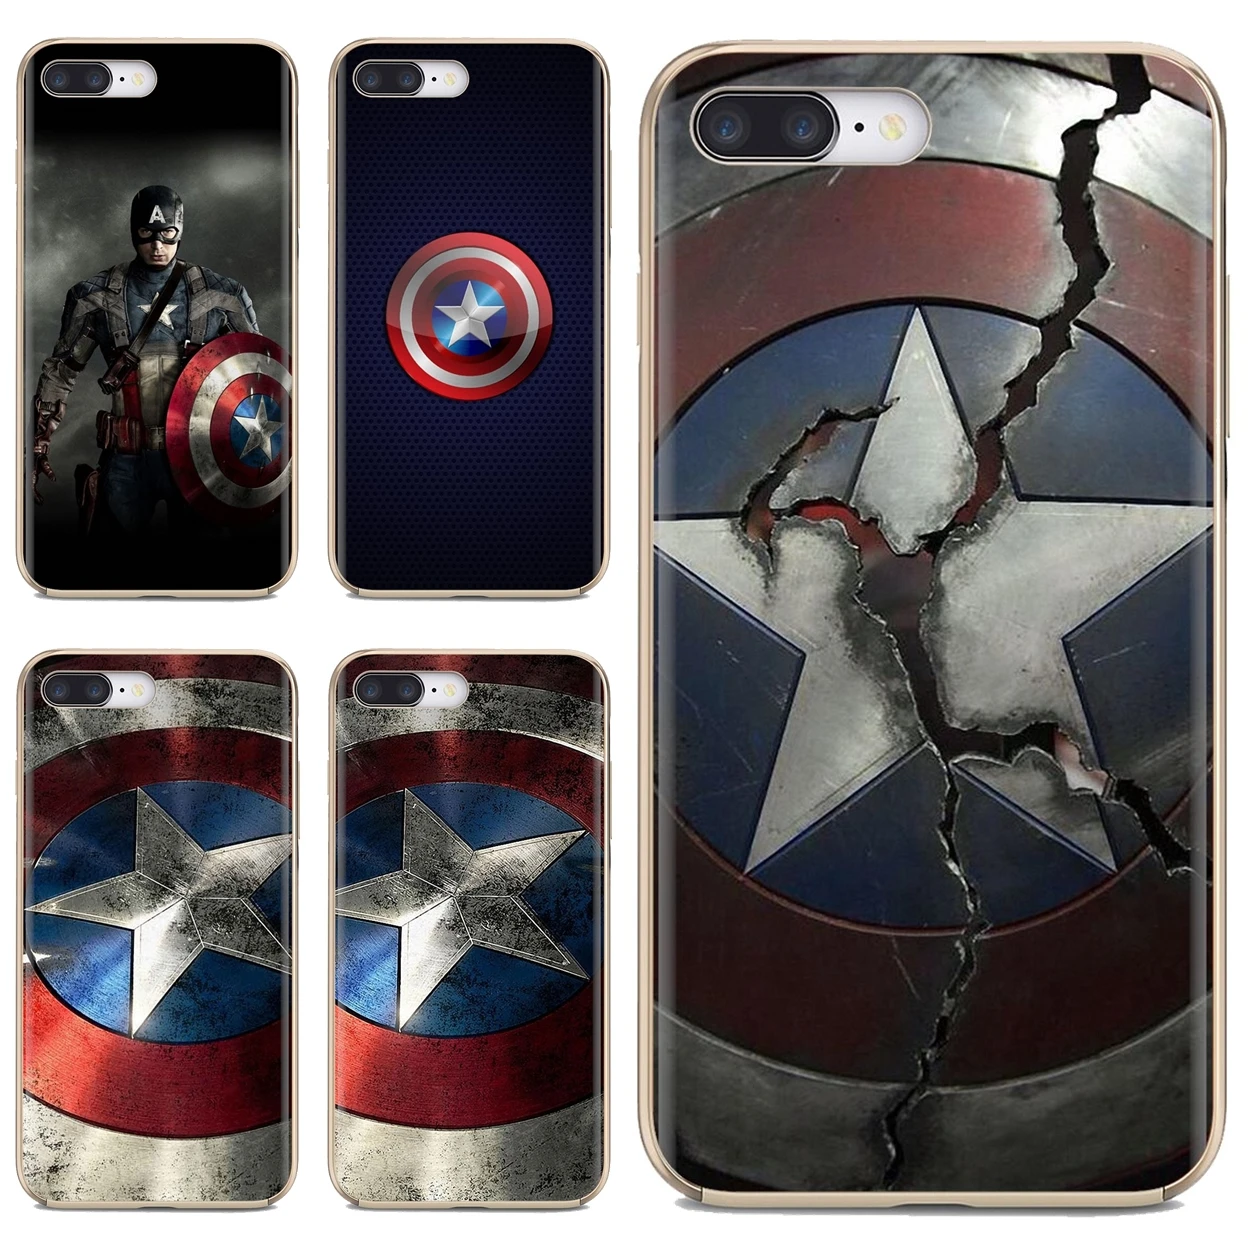 

For iPhone 10 11 12 13 Mini Pro 4S 5S SE 5C 6 6S 7 8 X XR XS Plus Max 2020 Soft Silicone Case Chris Evans Captain America Shield